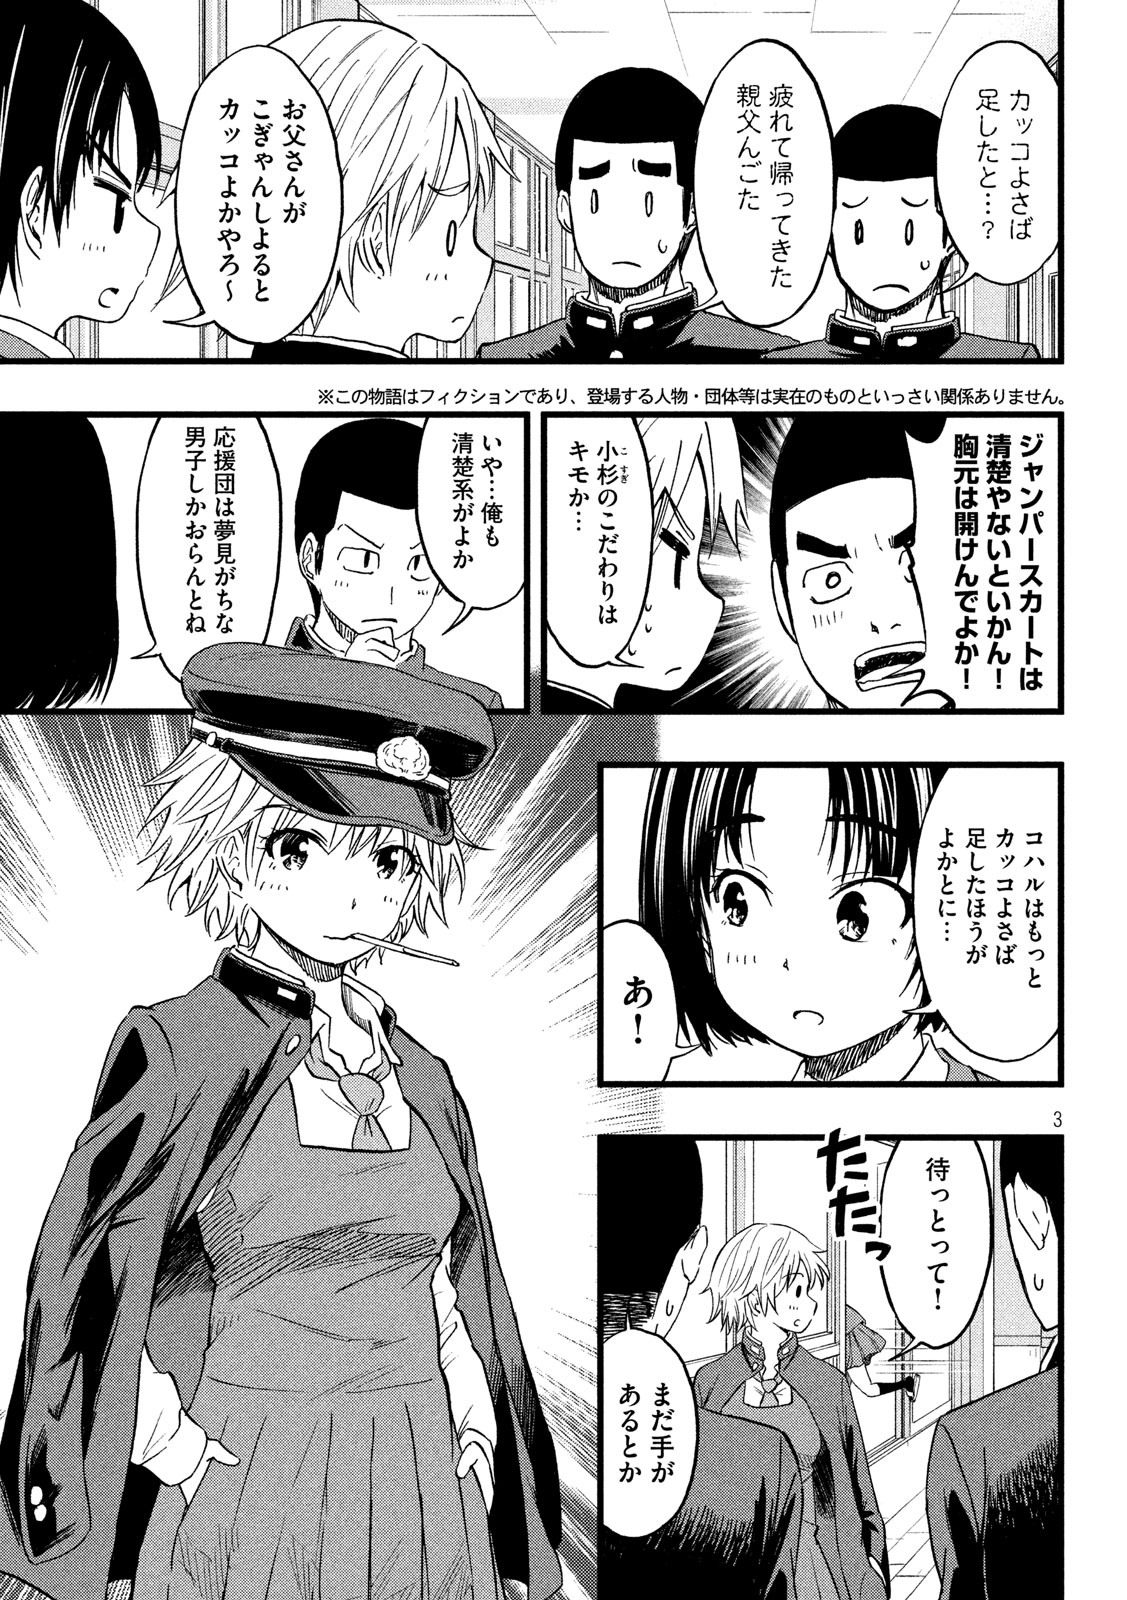 Koharu haru! - Chapter 53 - Page 3